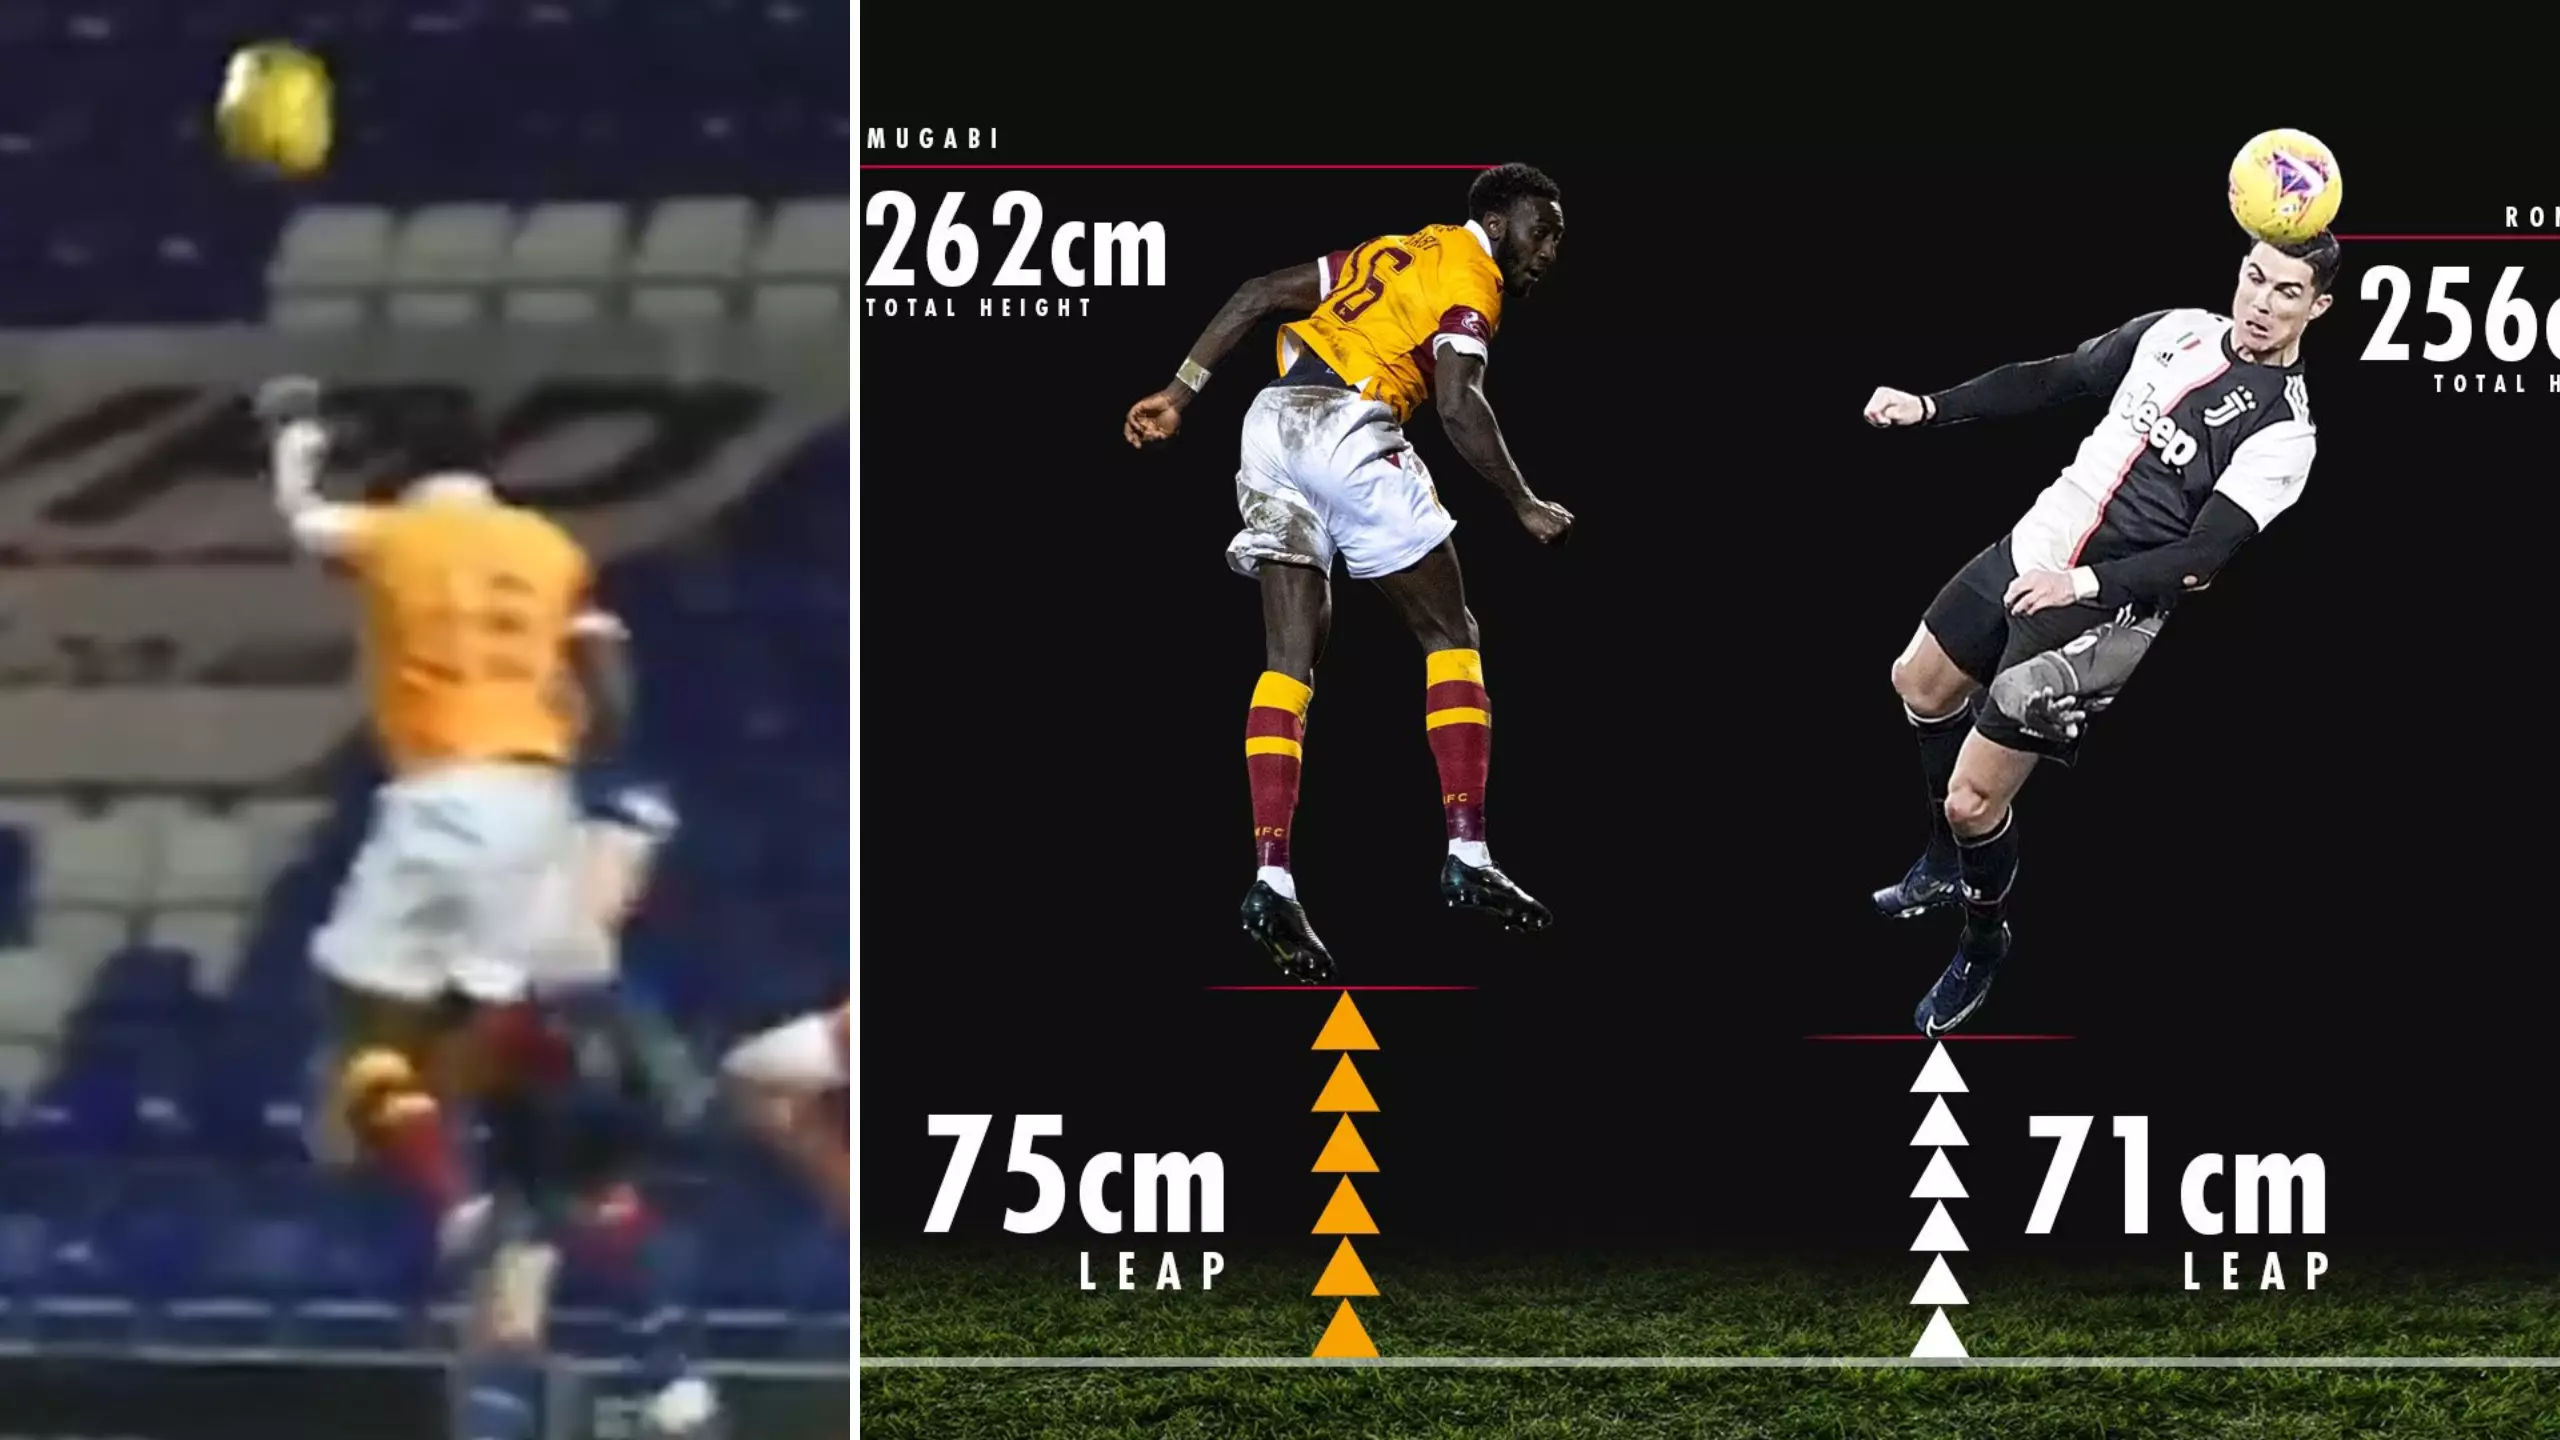 Watch Motherwell Player Beat Cristiano Ronaldo's Insane Jumping Record